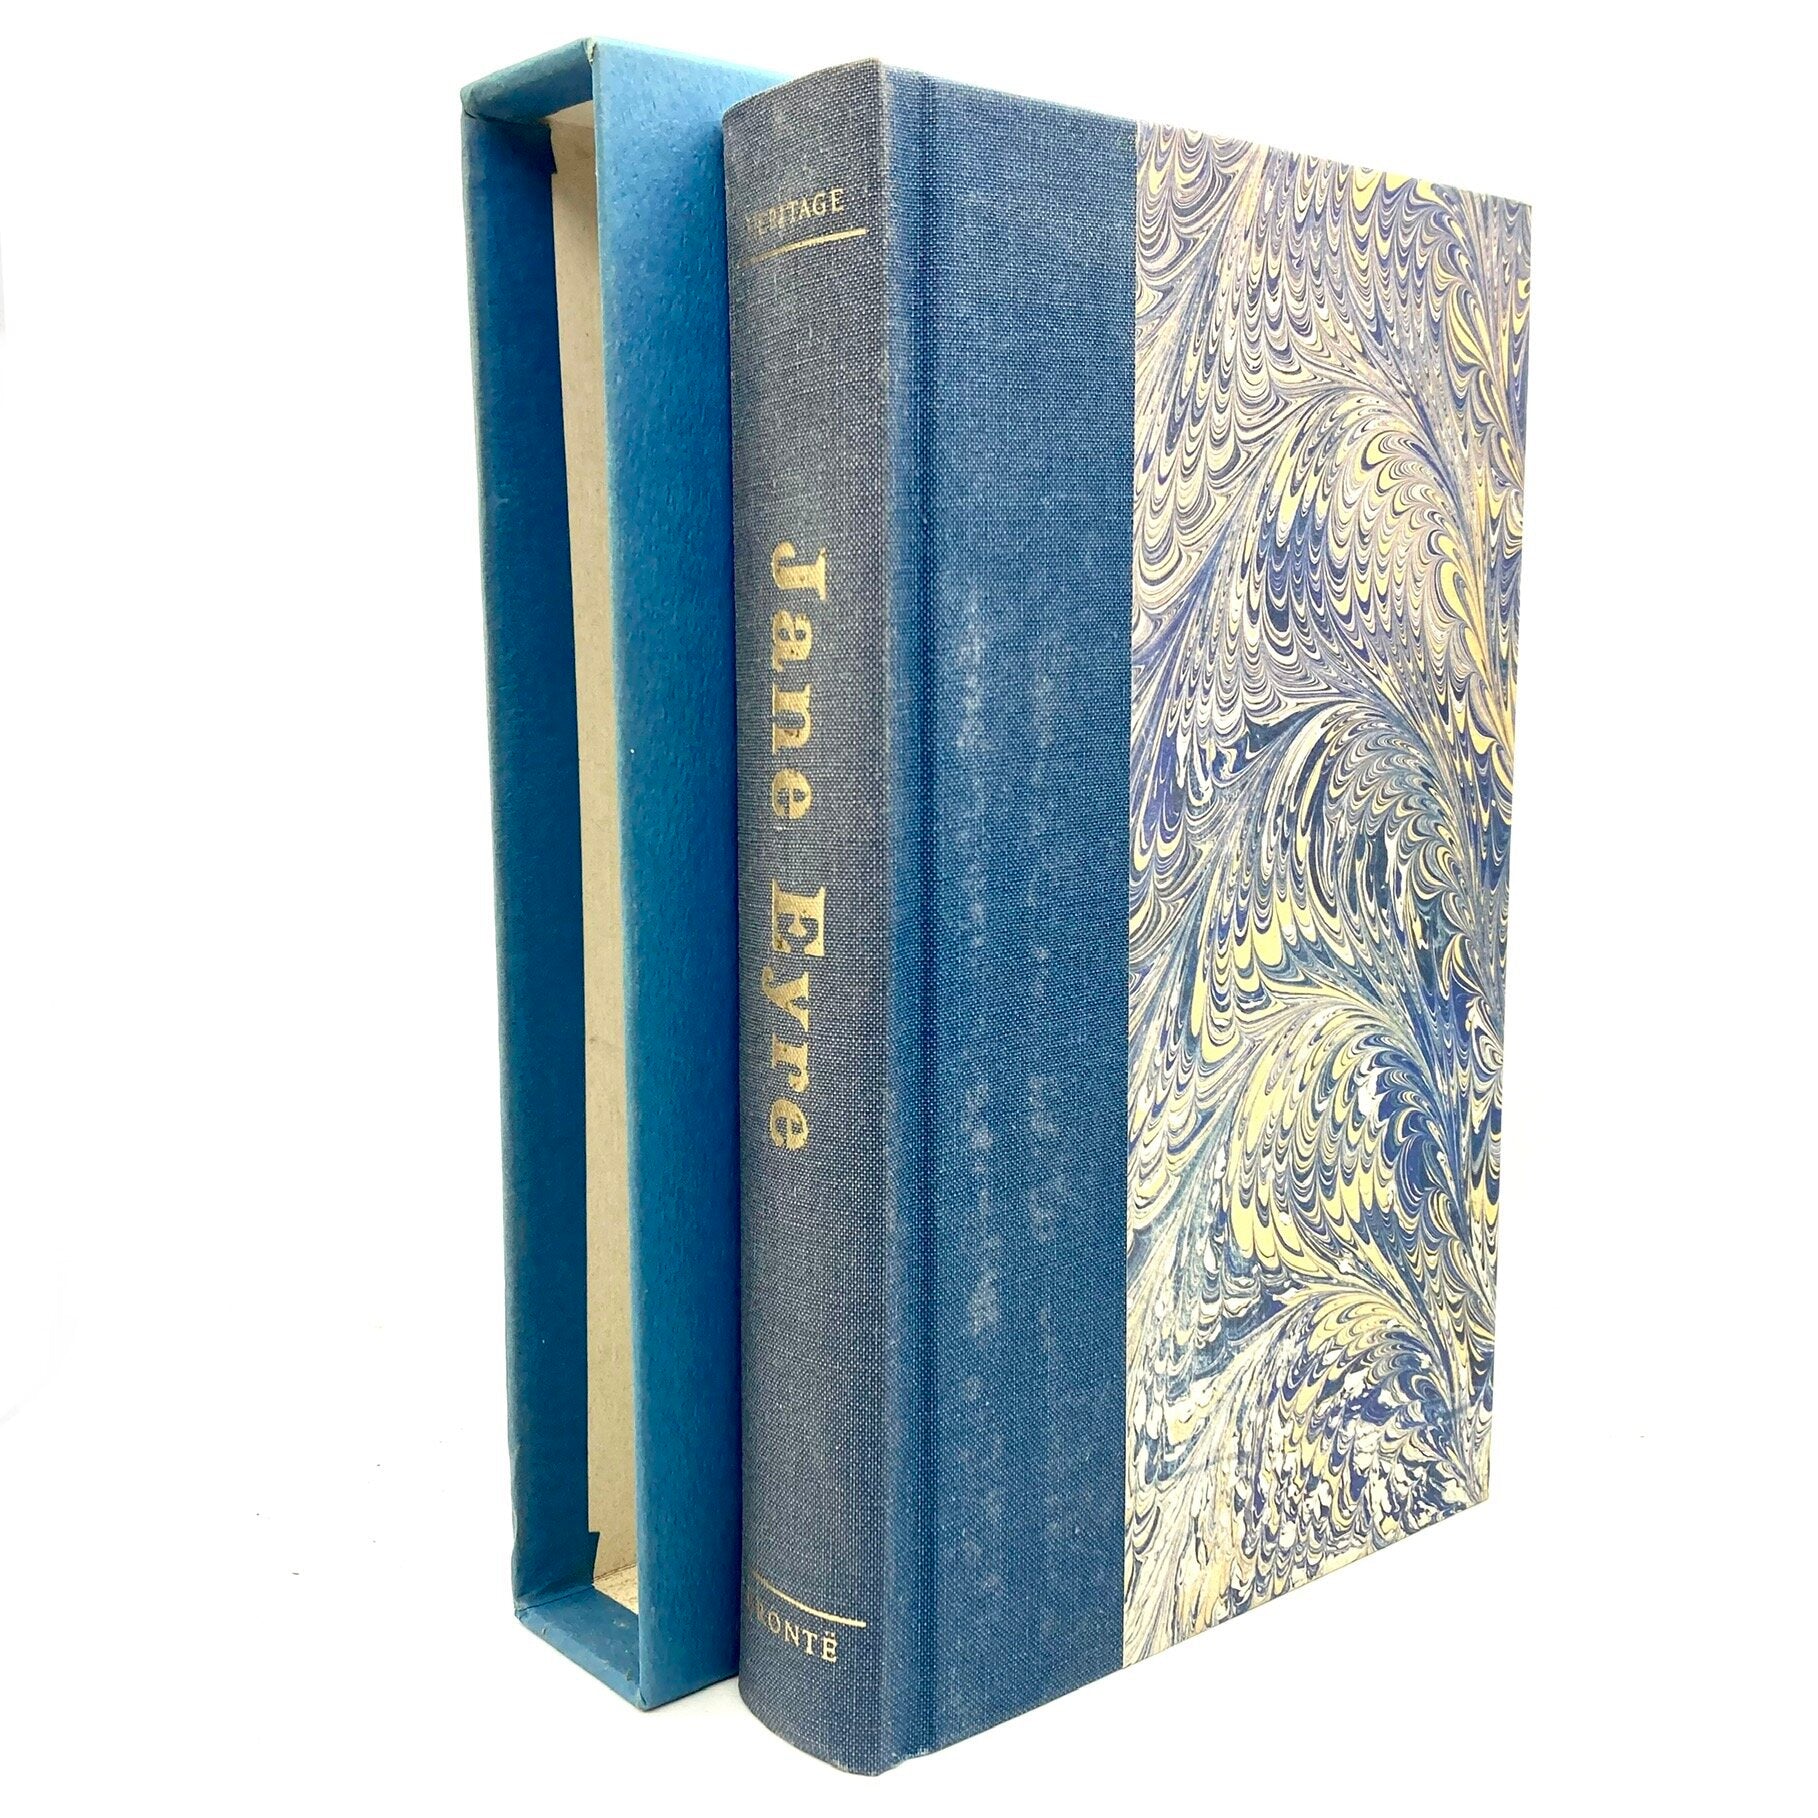 BRONTE, Charlotte "Jane Eyre" [Heritage Press, 1974] - Buzz Bookstore